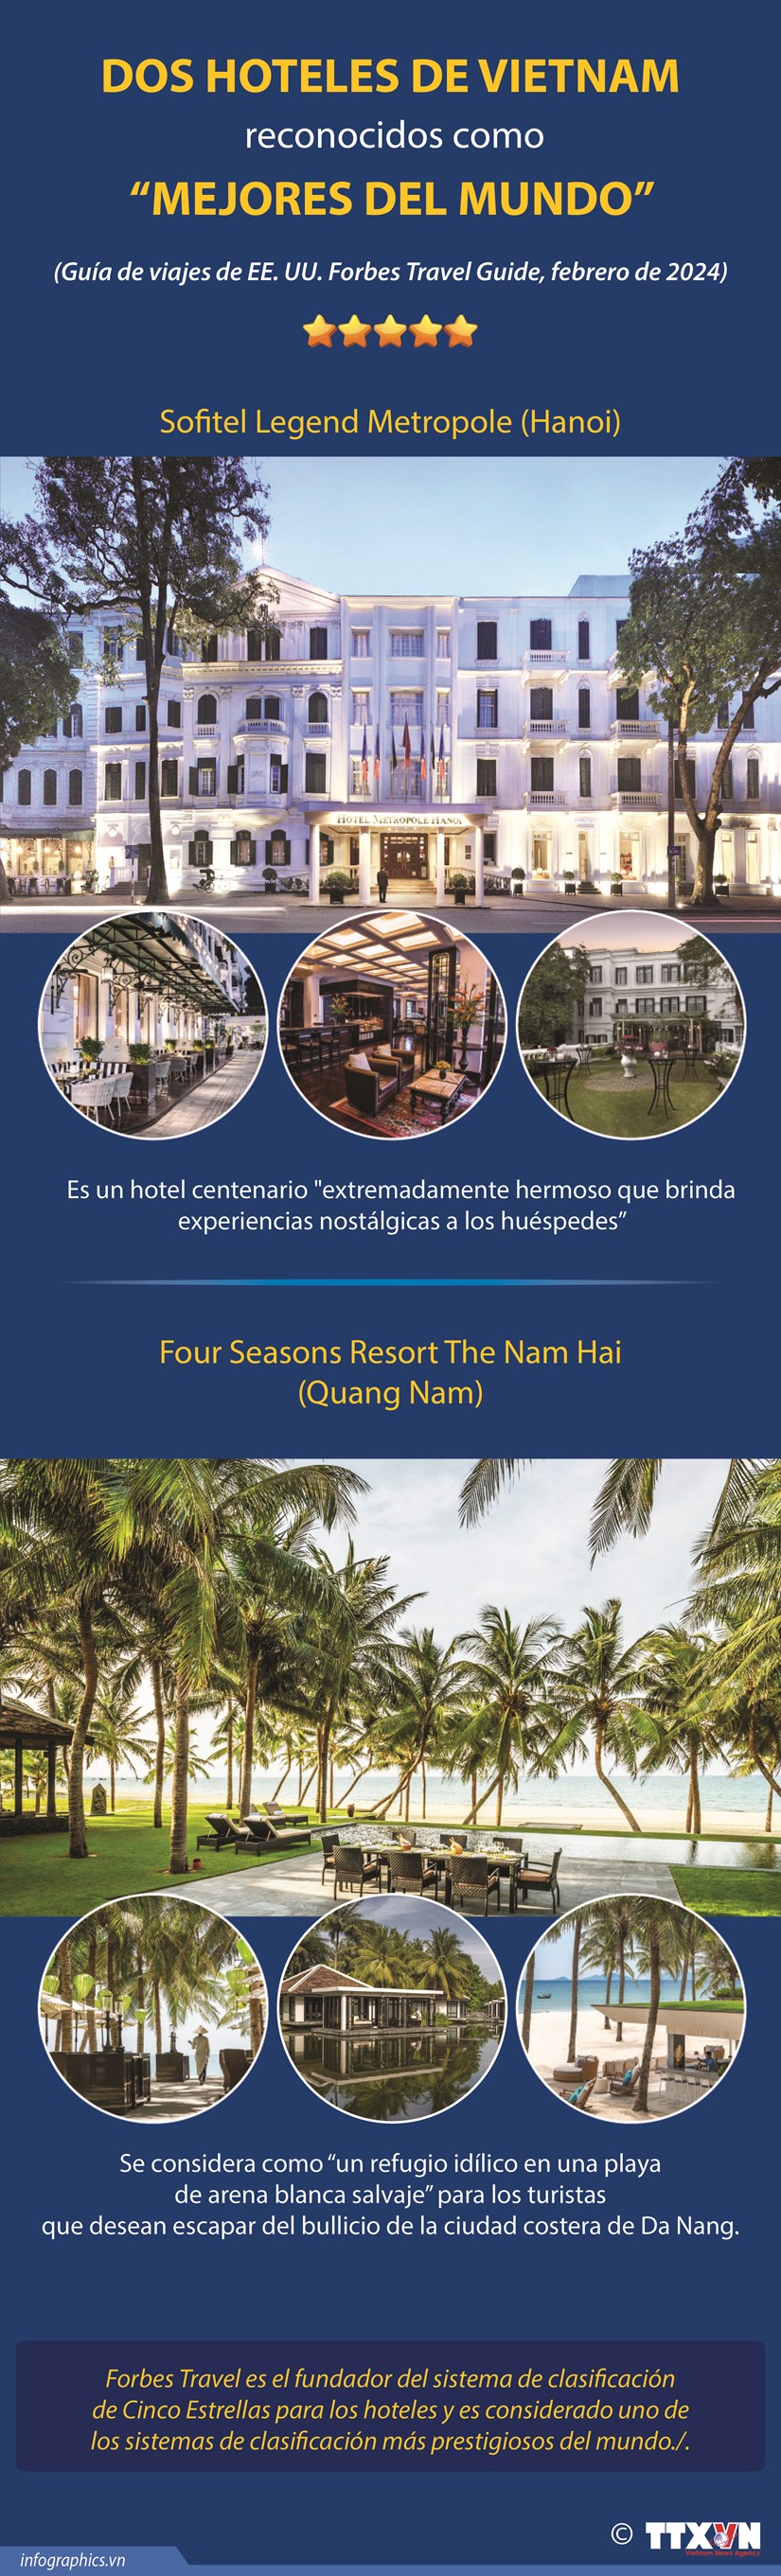 Dos hoteles vietnamitas reconocidos como mejores del mundo hinh anh 1